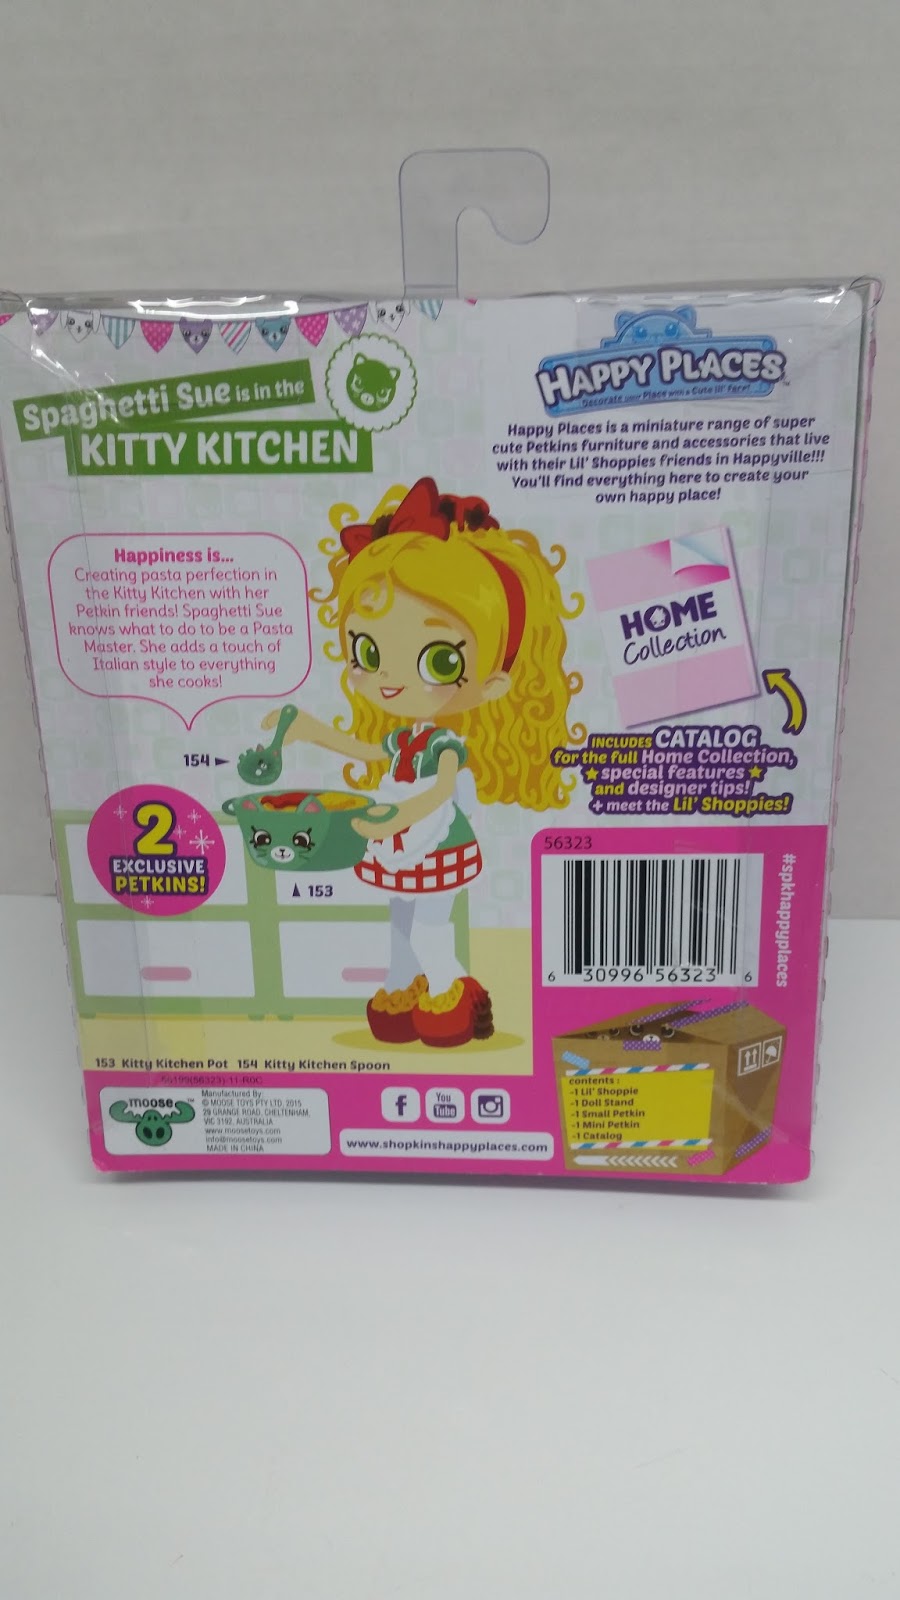 New Shopkins Kitty Kitchen Spaghetti Sue Lil' Shoppie Pack Official